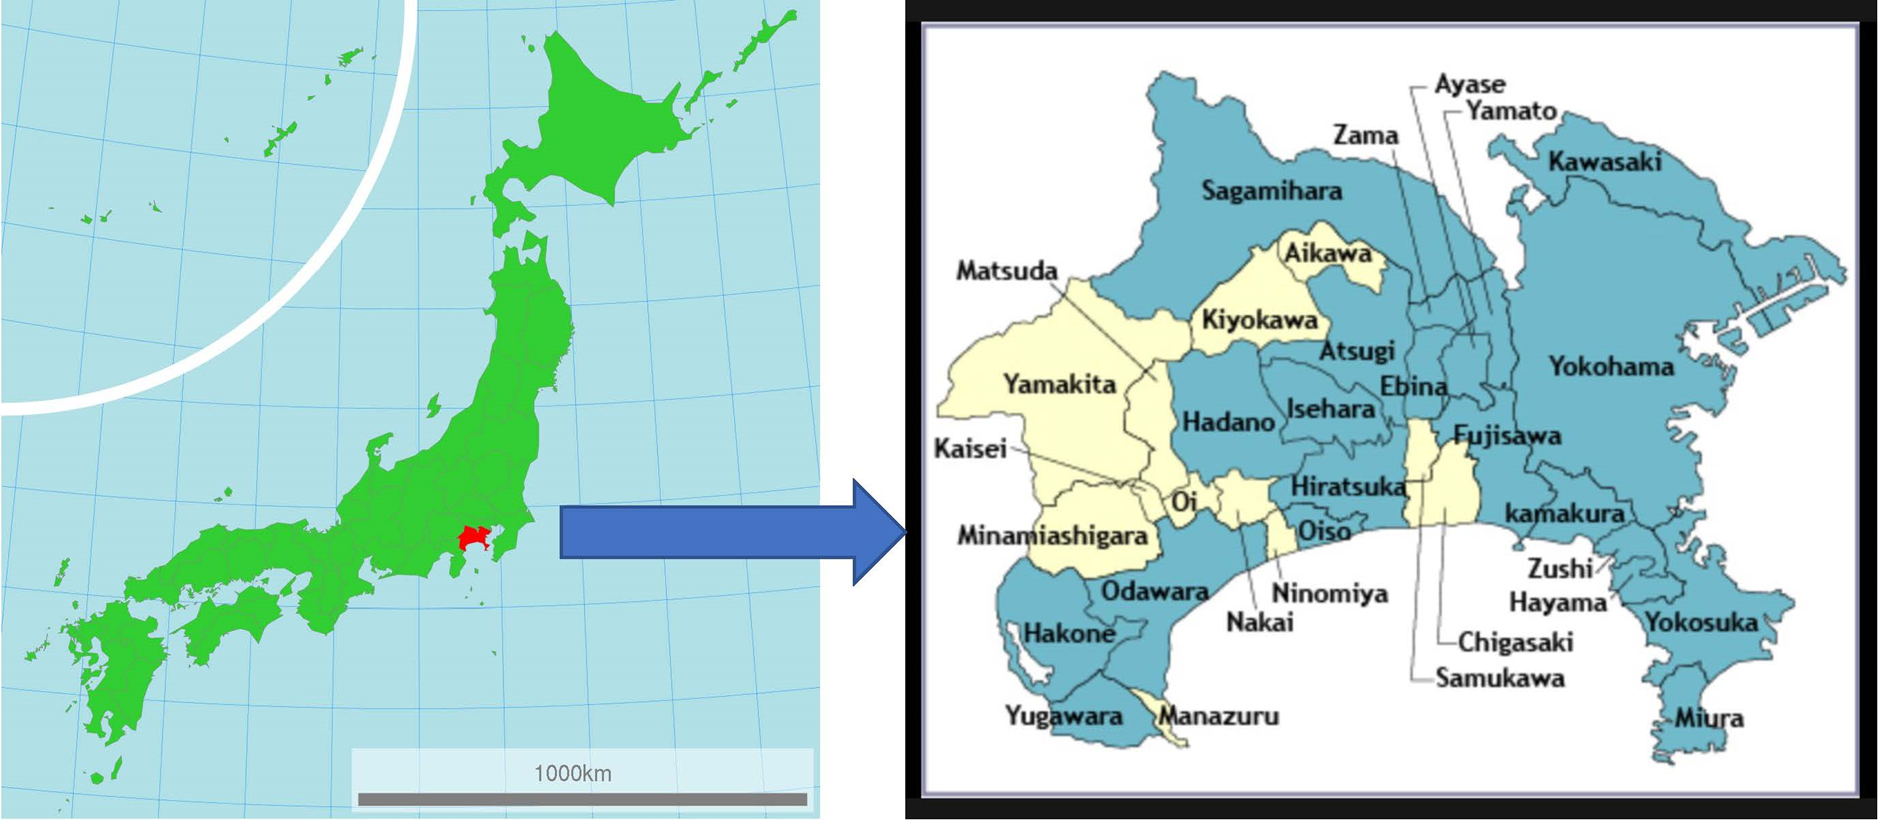 Cities in Kanagawa Prefecture: Kamakura, Kanagawa, Chigasaki